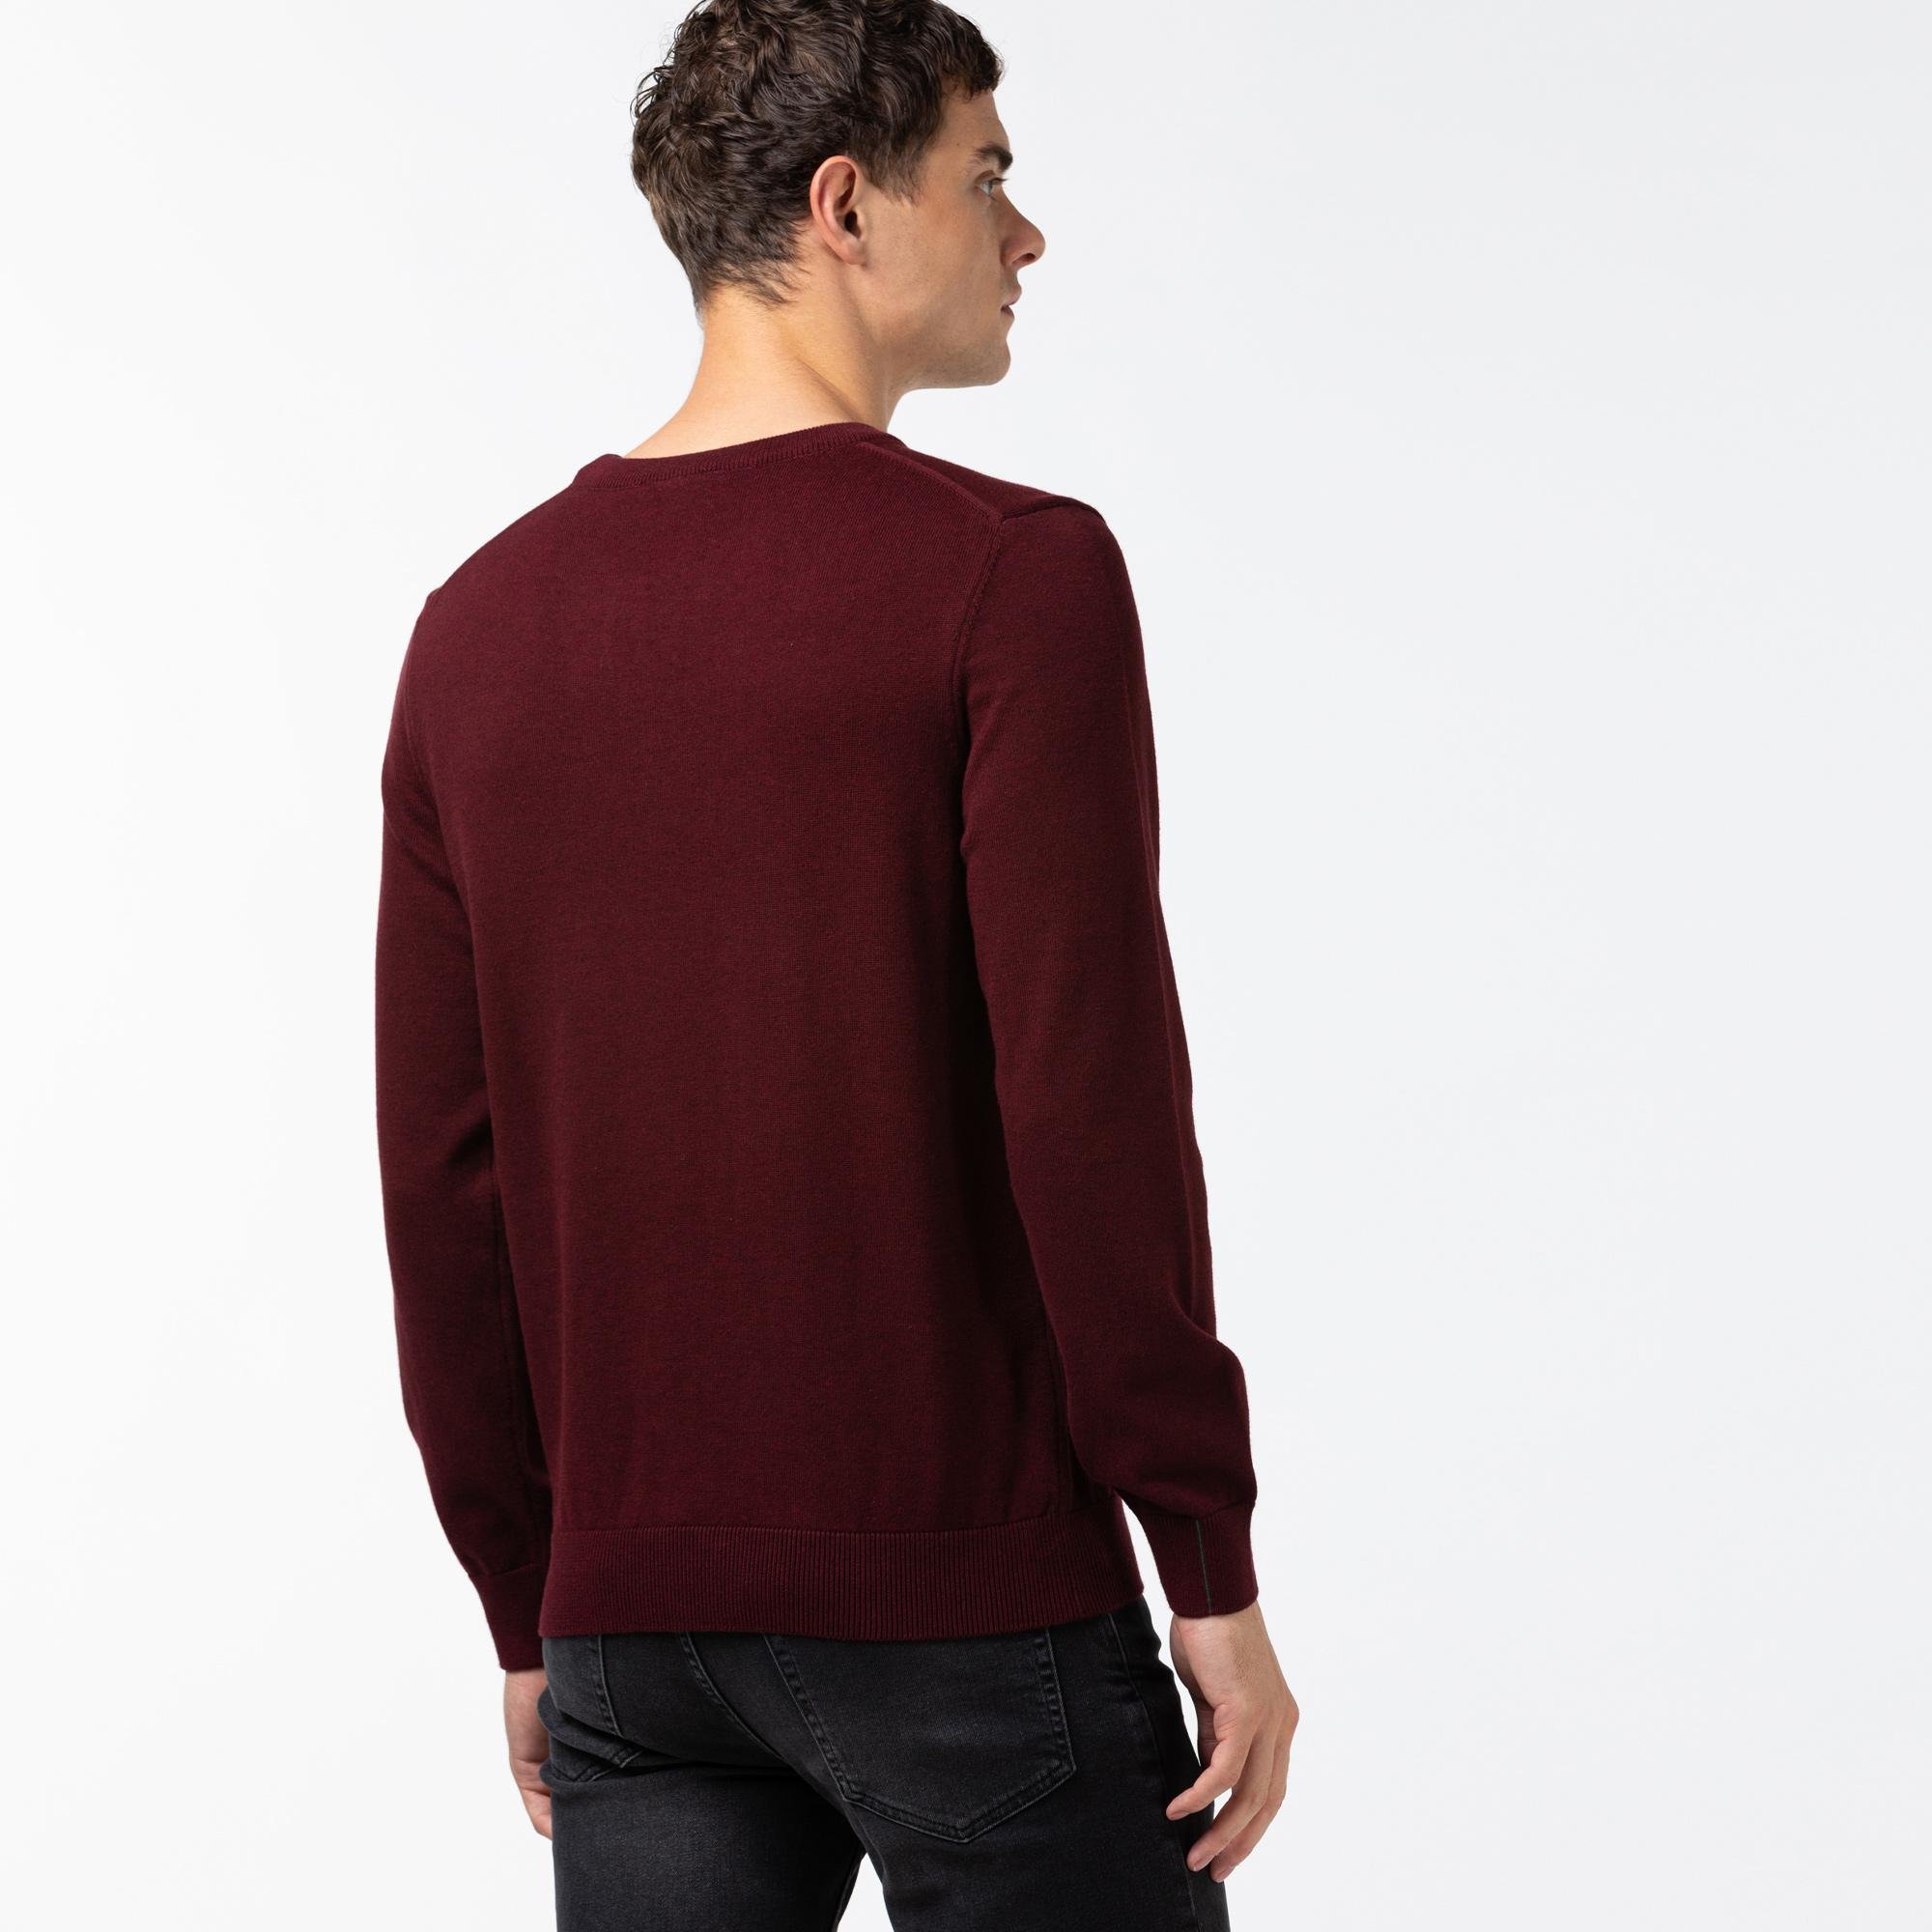 Lacoste Men's Organic Cotton Crew Neck Sweater